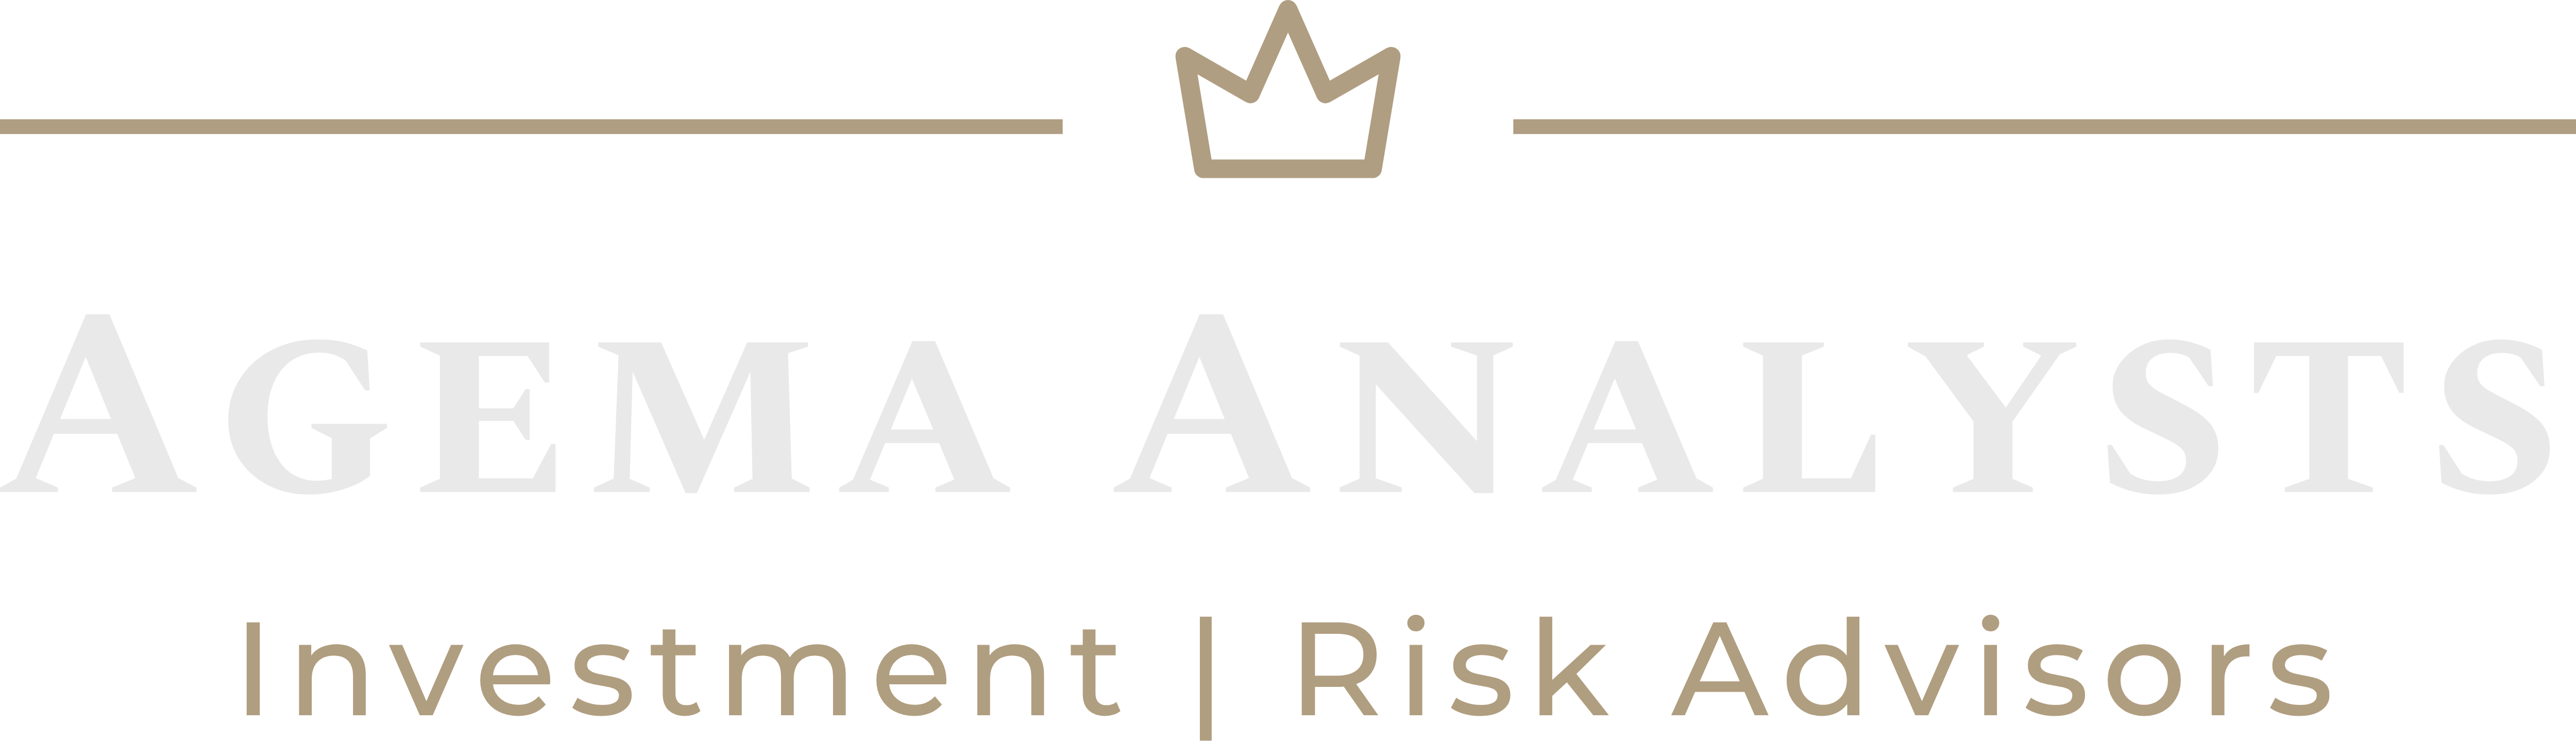 agema_analysts_logo